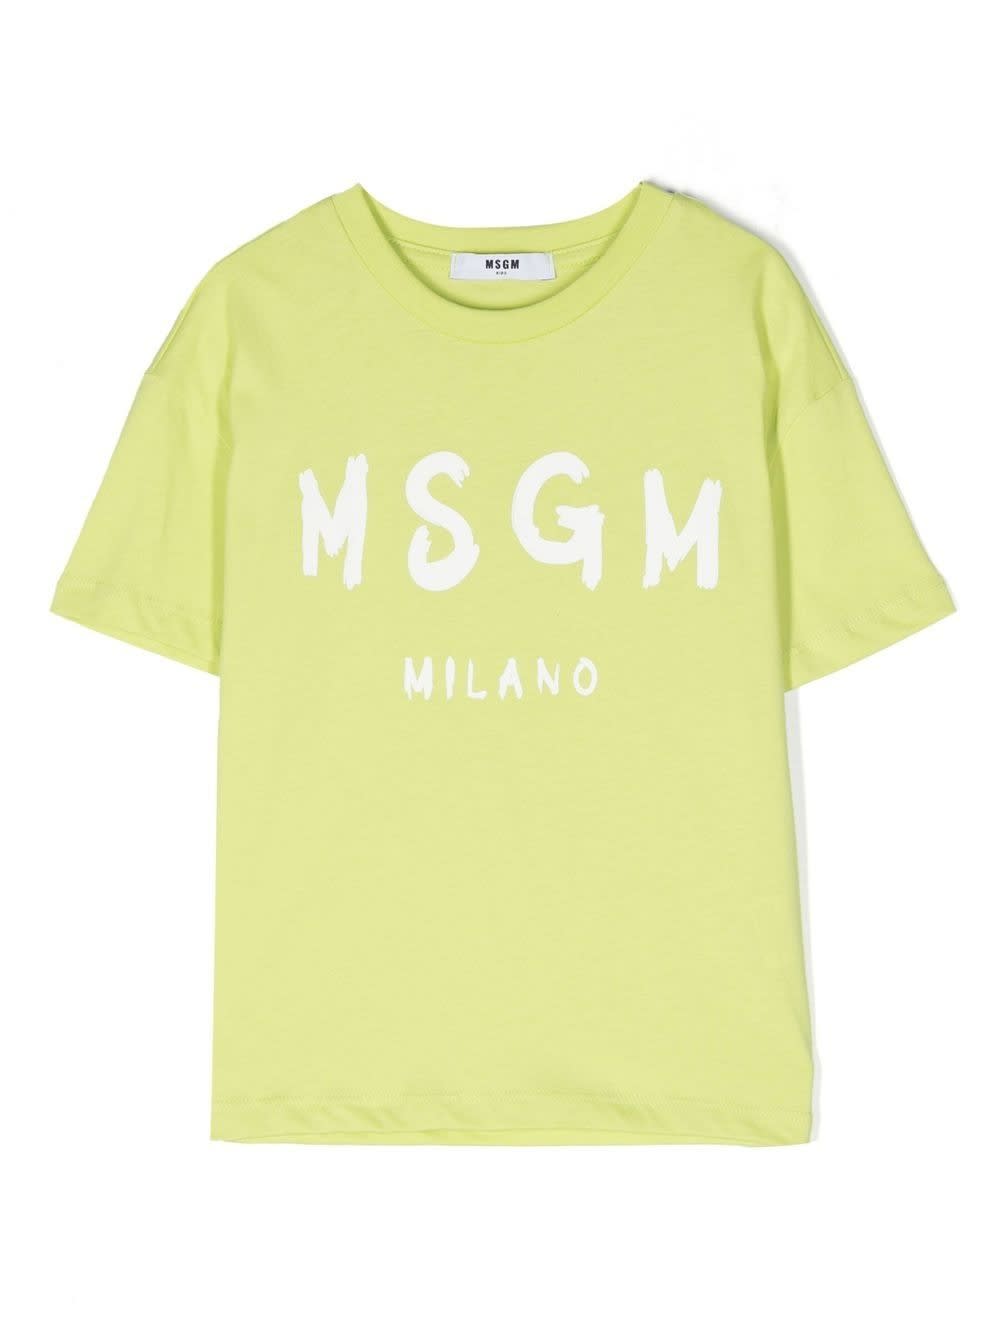 Msgm Kids' T-shirt Gialla Con Logo Bianco In Yellow